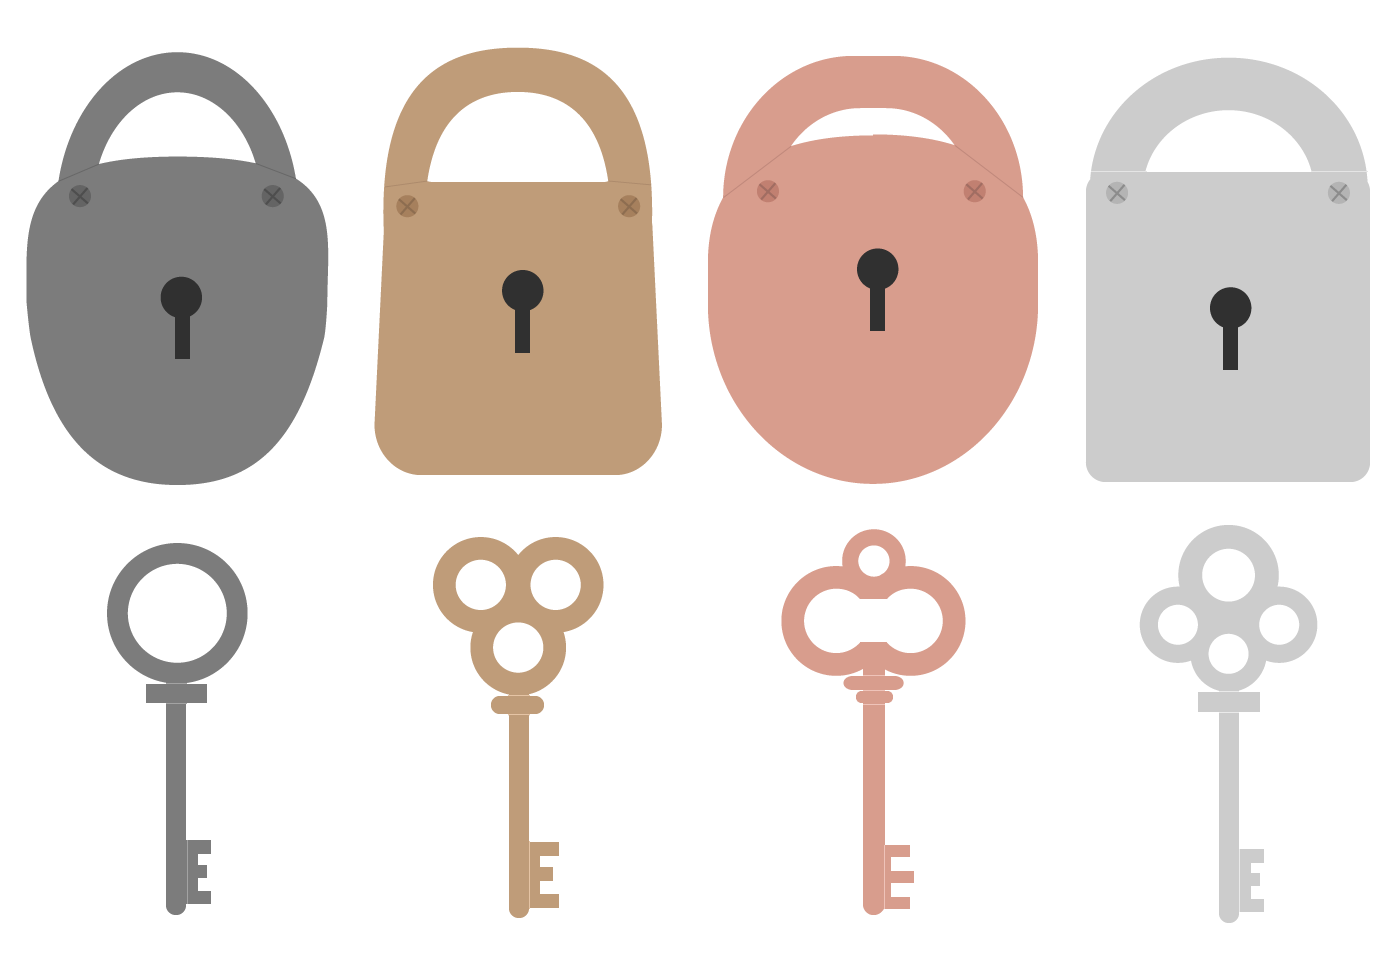 Peer key. Замок и ключ. Ключики замочки. Замок с ключом для детей. Замочки и ключики для детей.